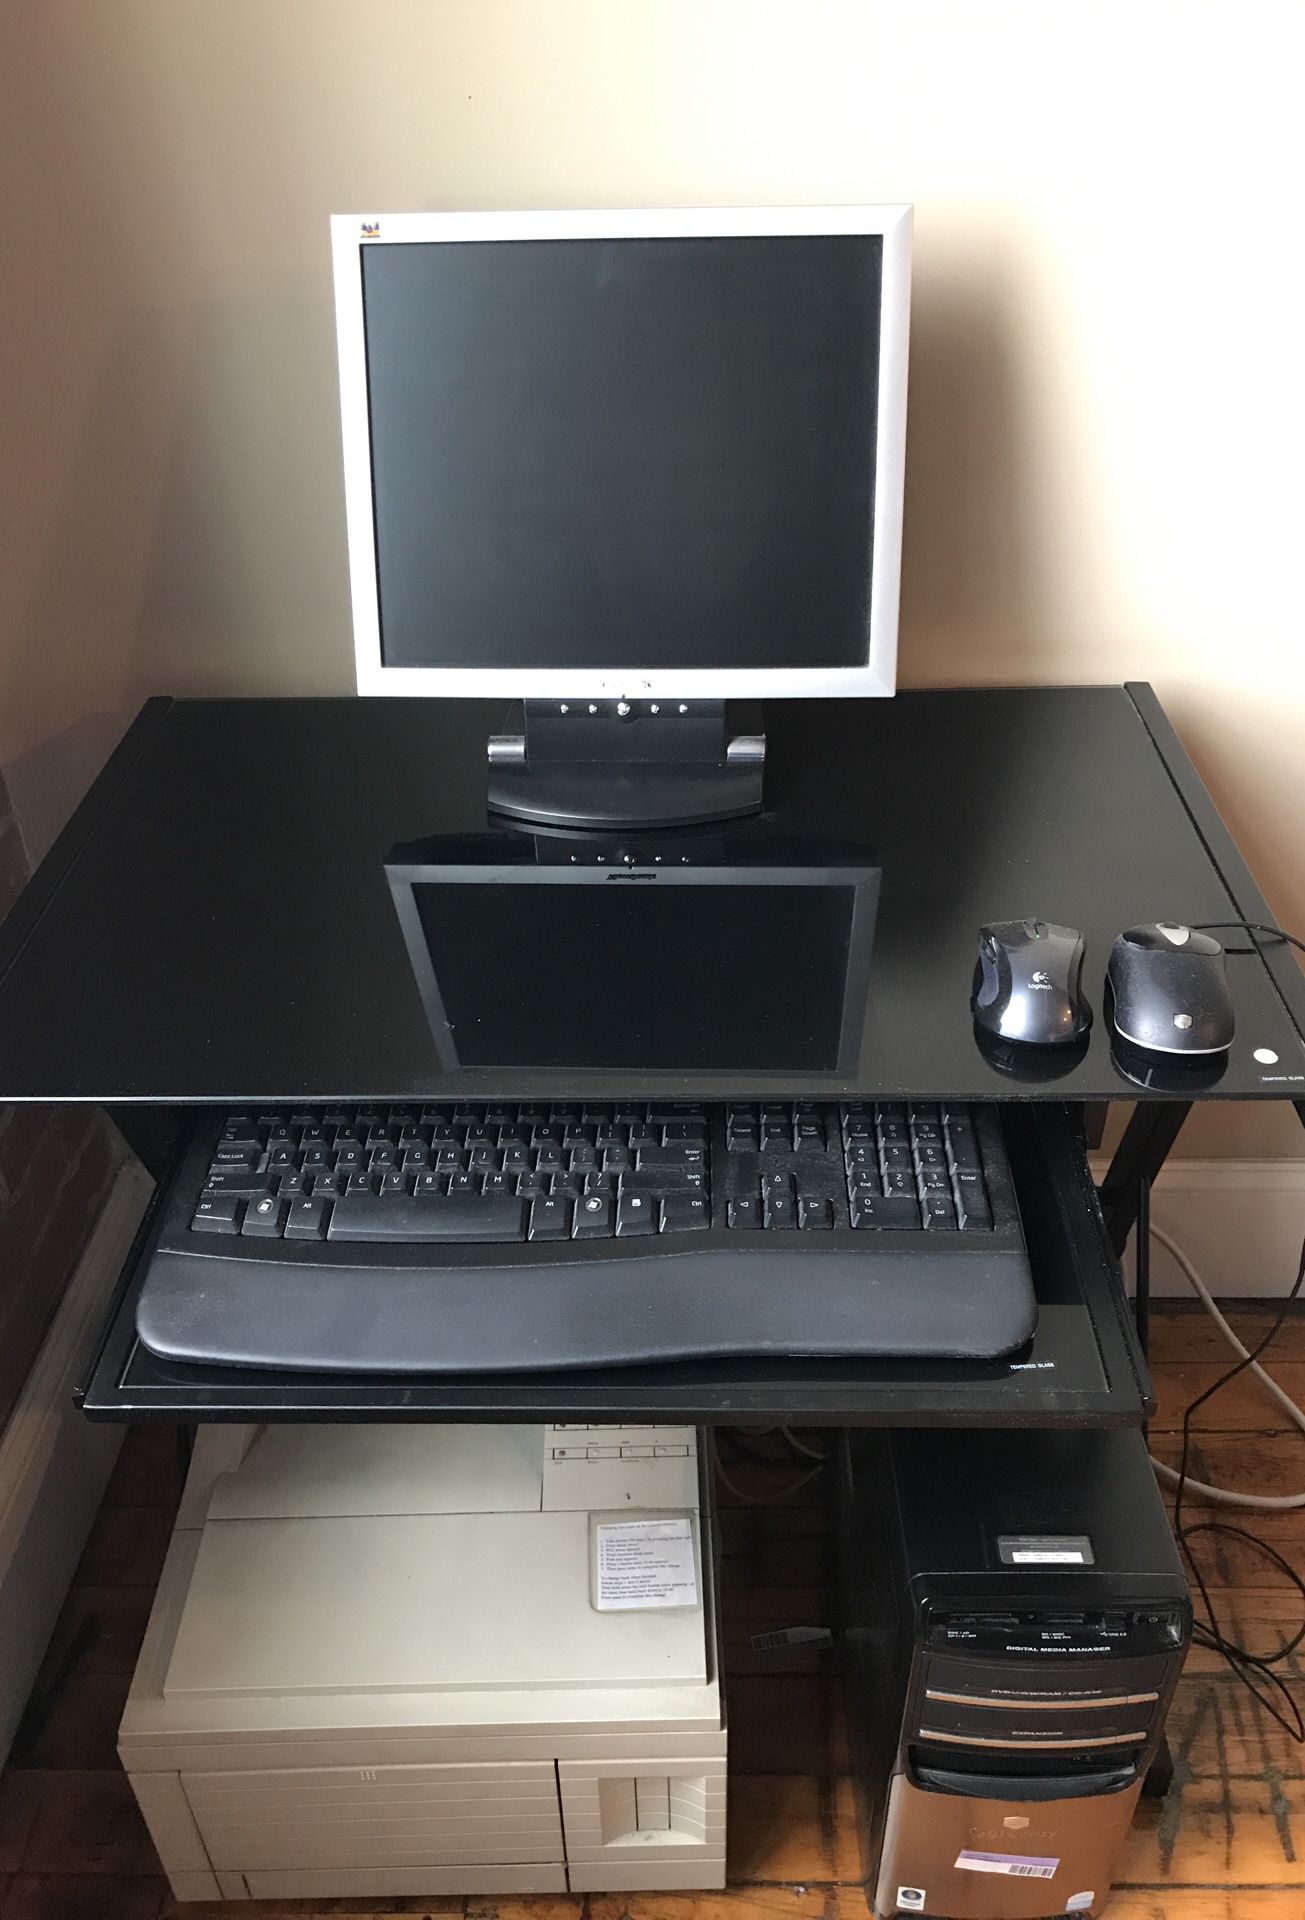 Computer desk, keyboard, monitor, HP LaserJet4, Gateway CPU and 2 mouse (one wireless)